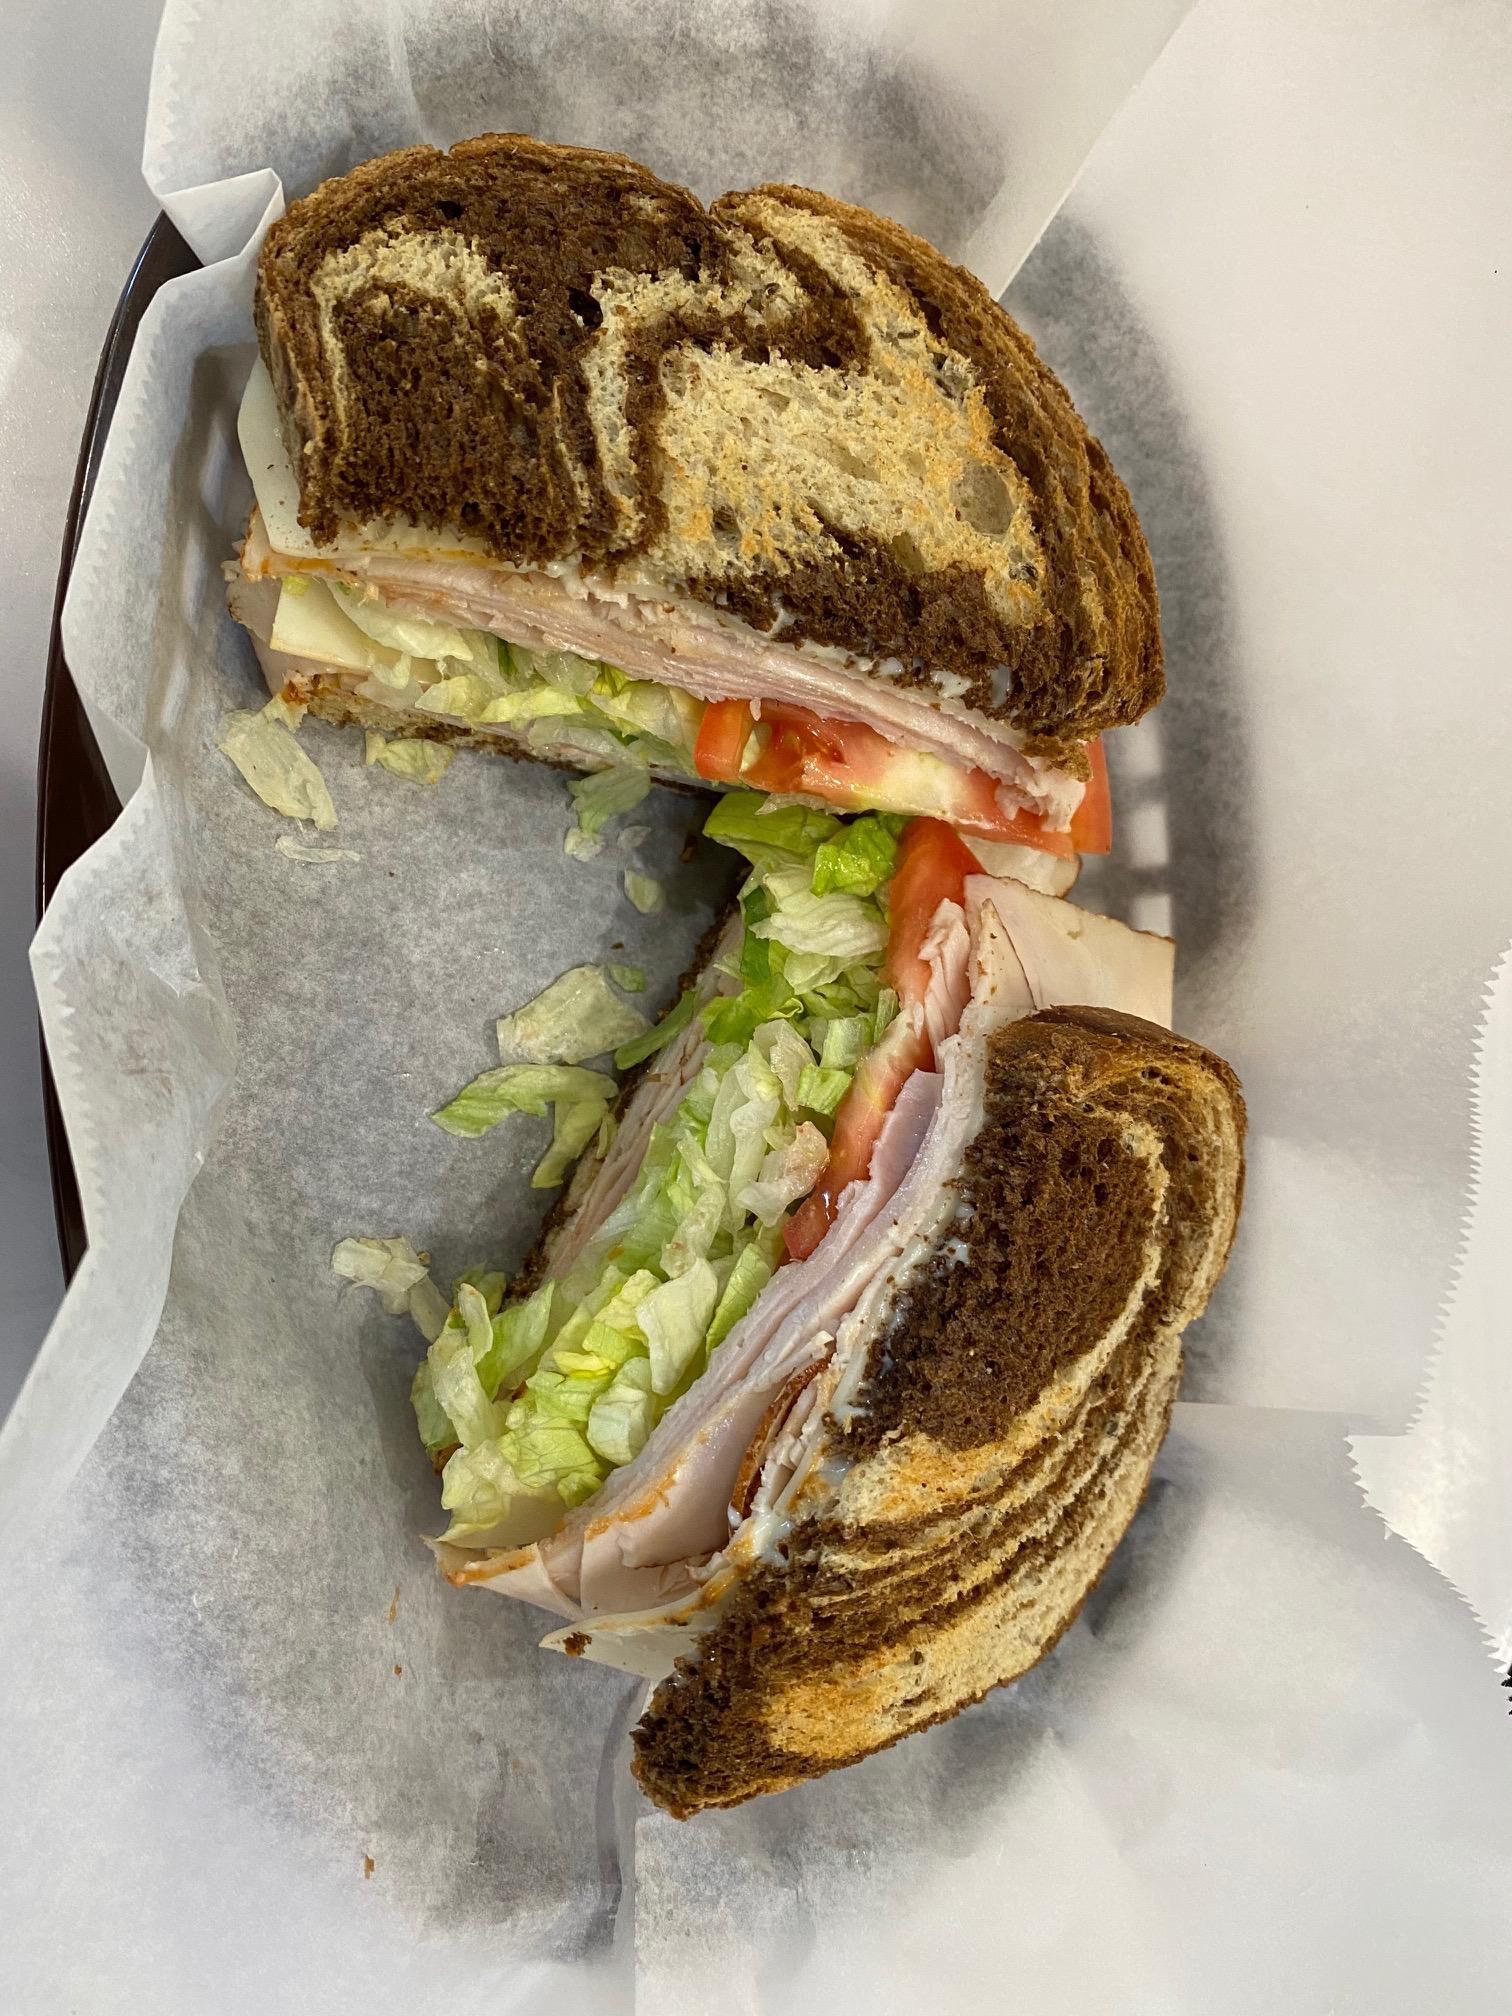 Deli sandwich - Turkey on Rye with provolone, lettuce and tomato